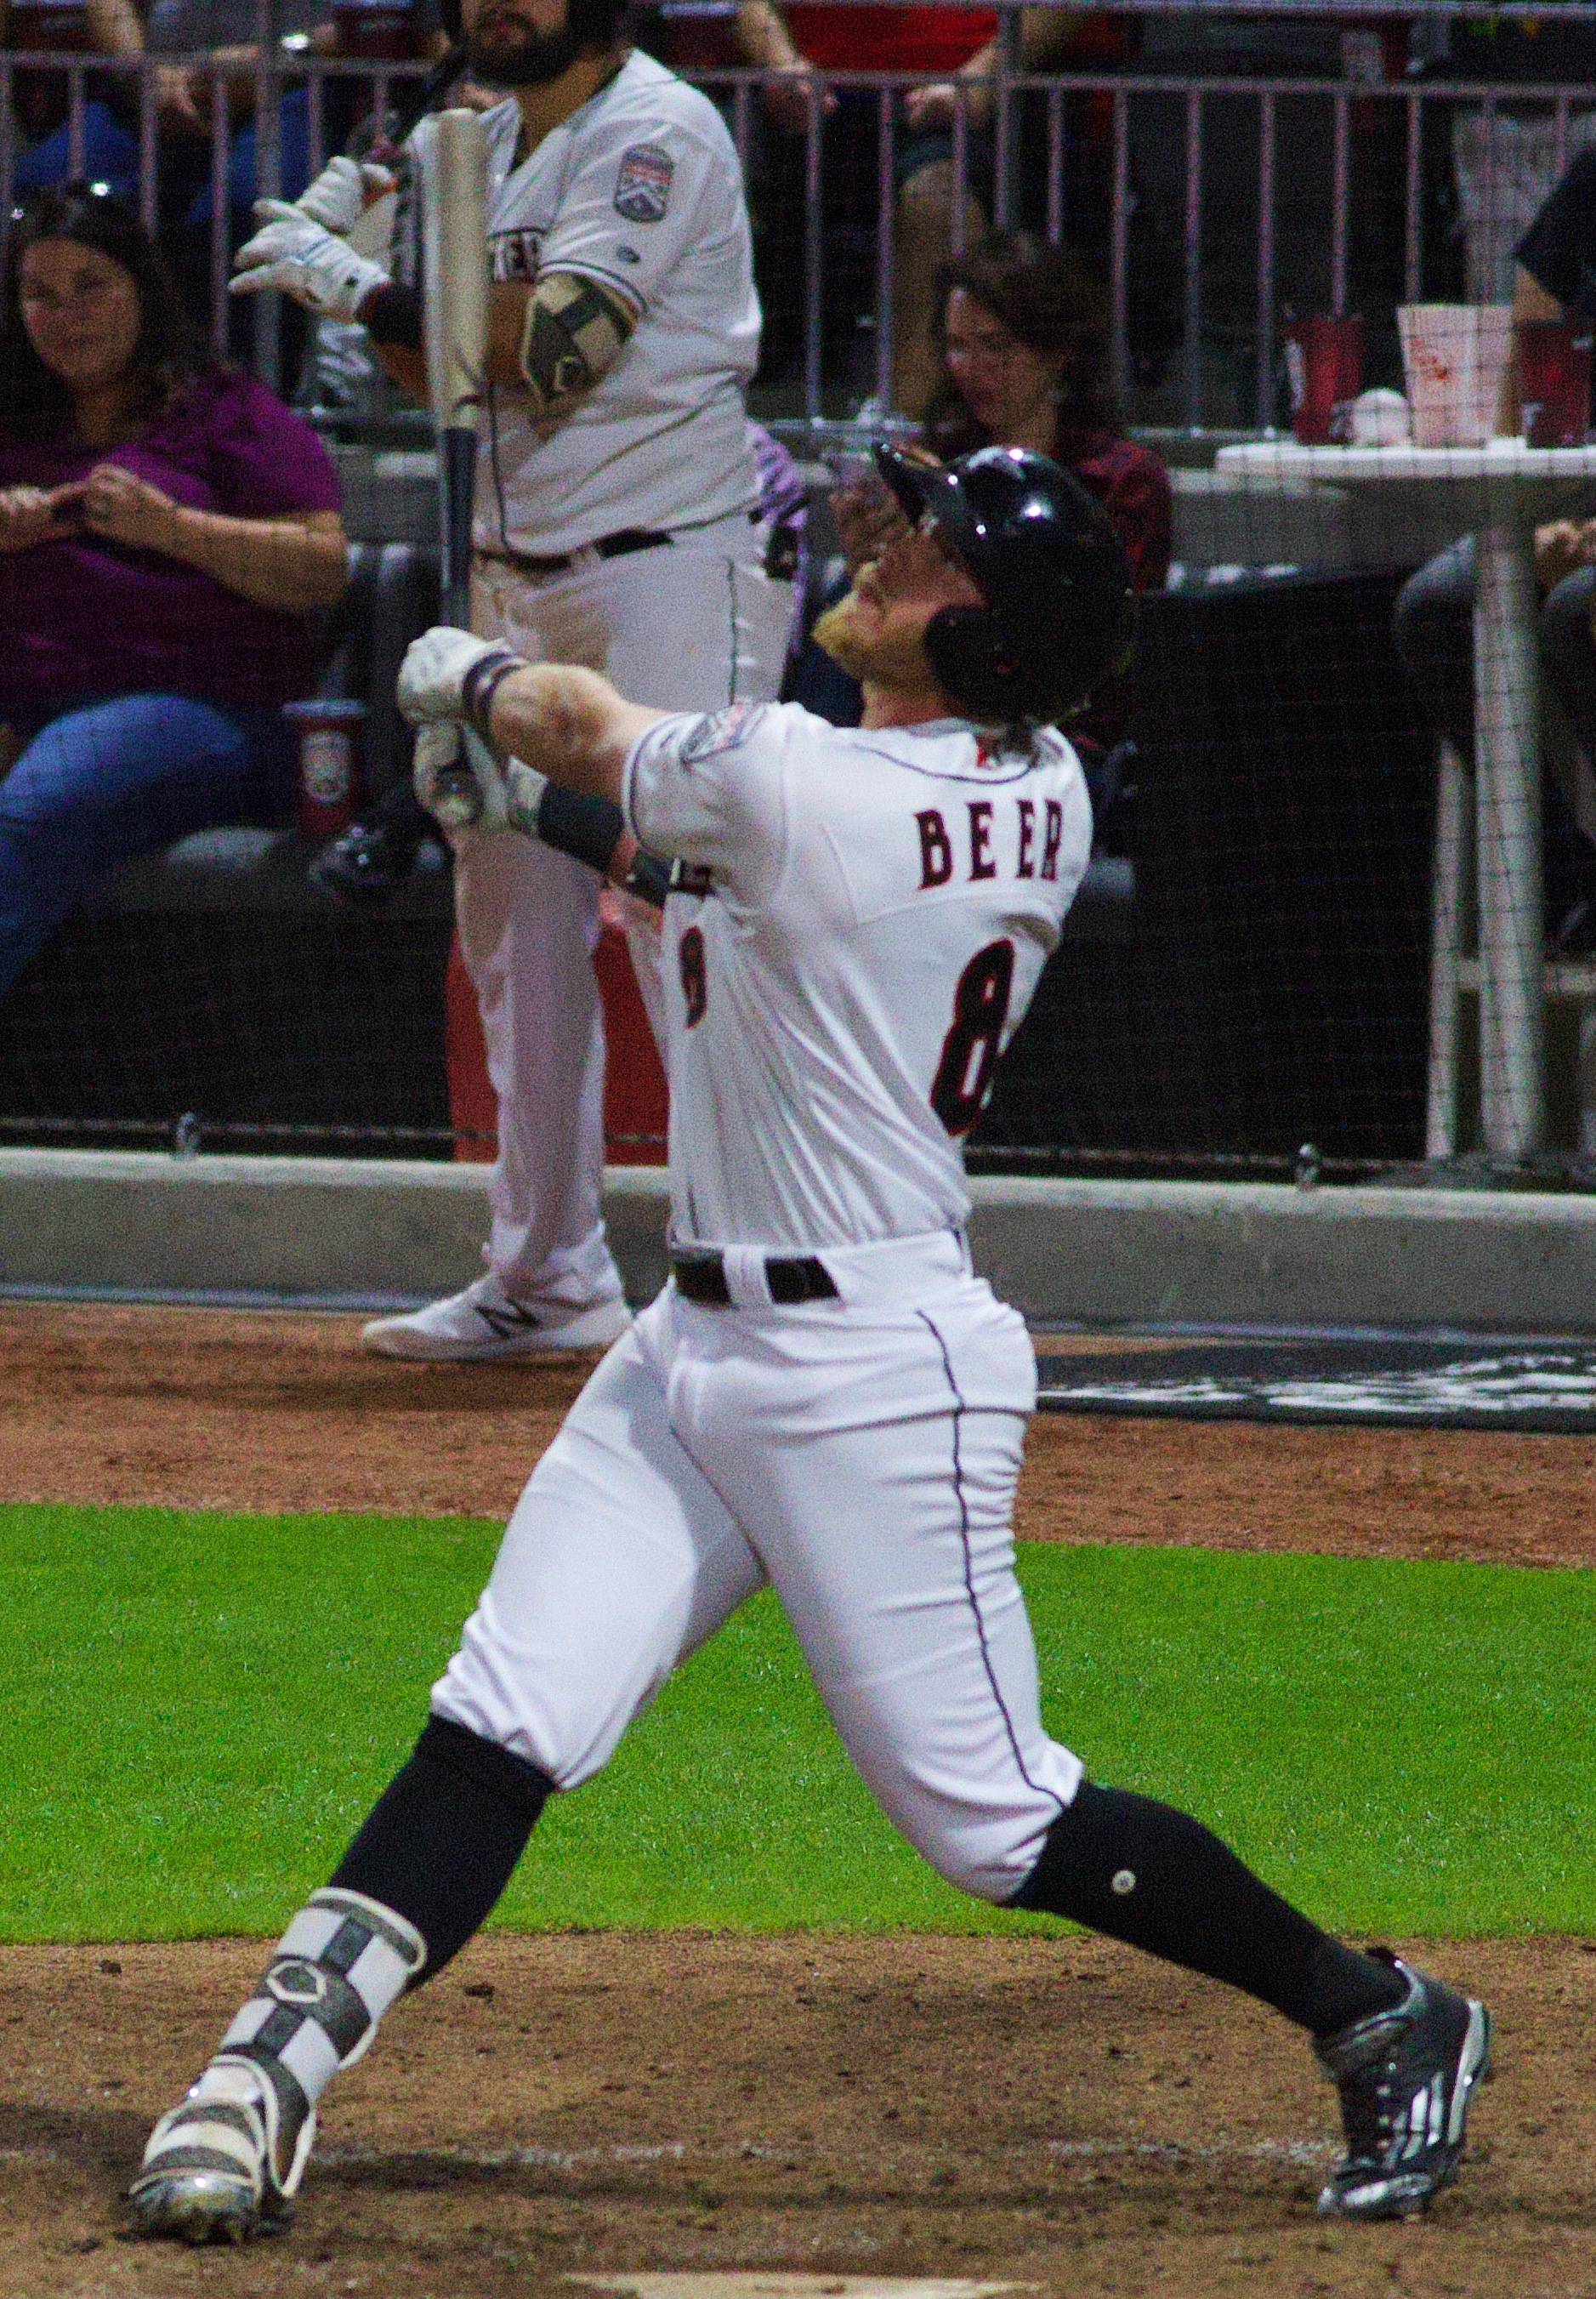 MLB's Arizona Fall League on X: The @Dbacks Seth Beer secures the